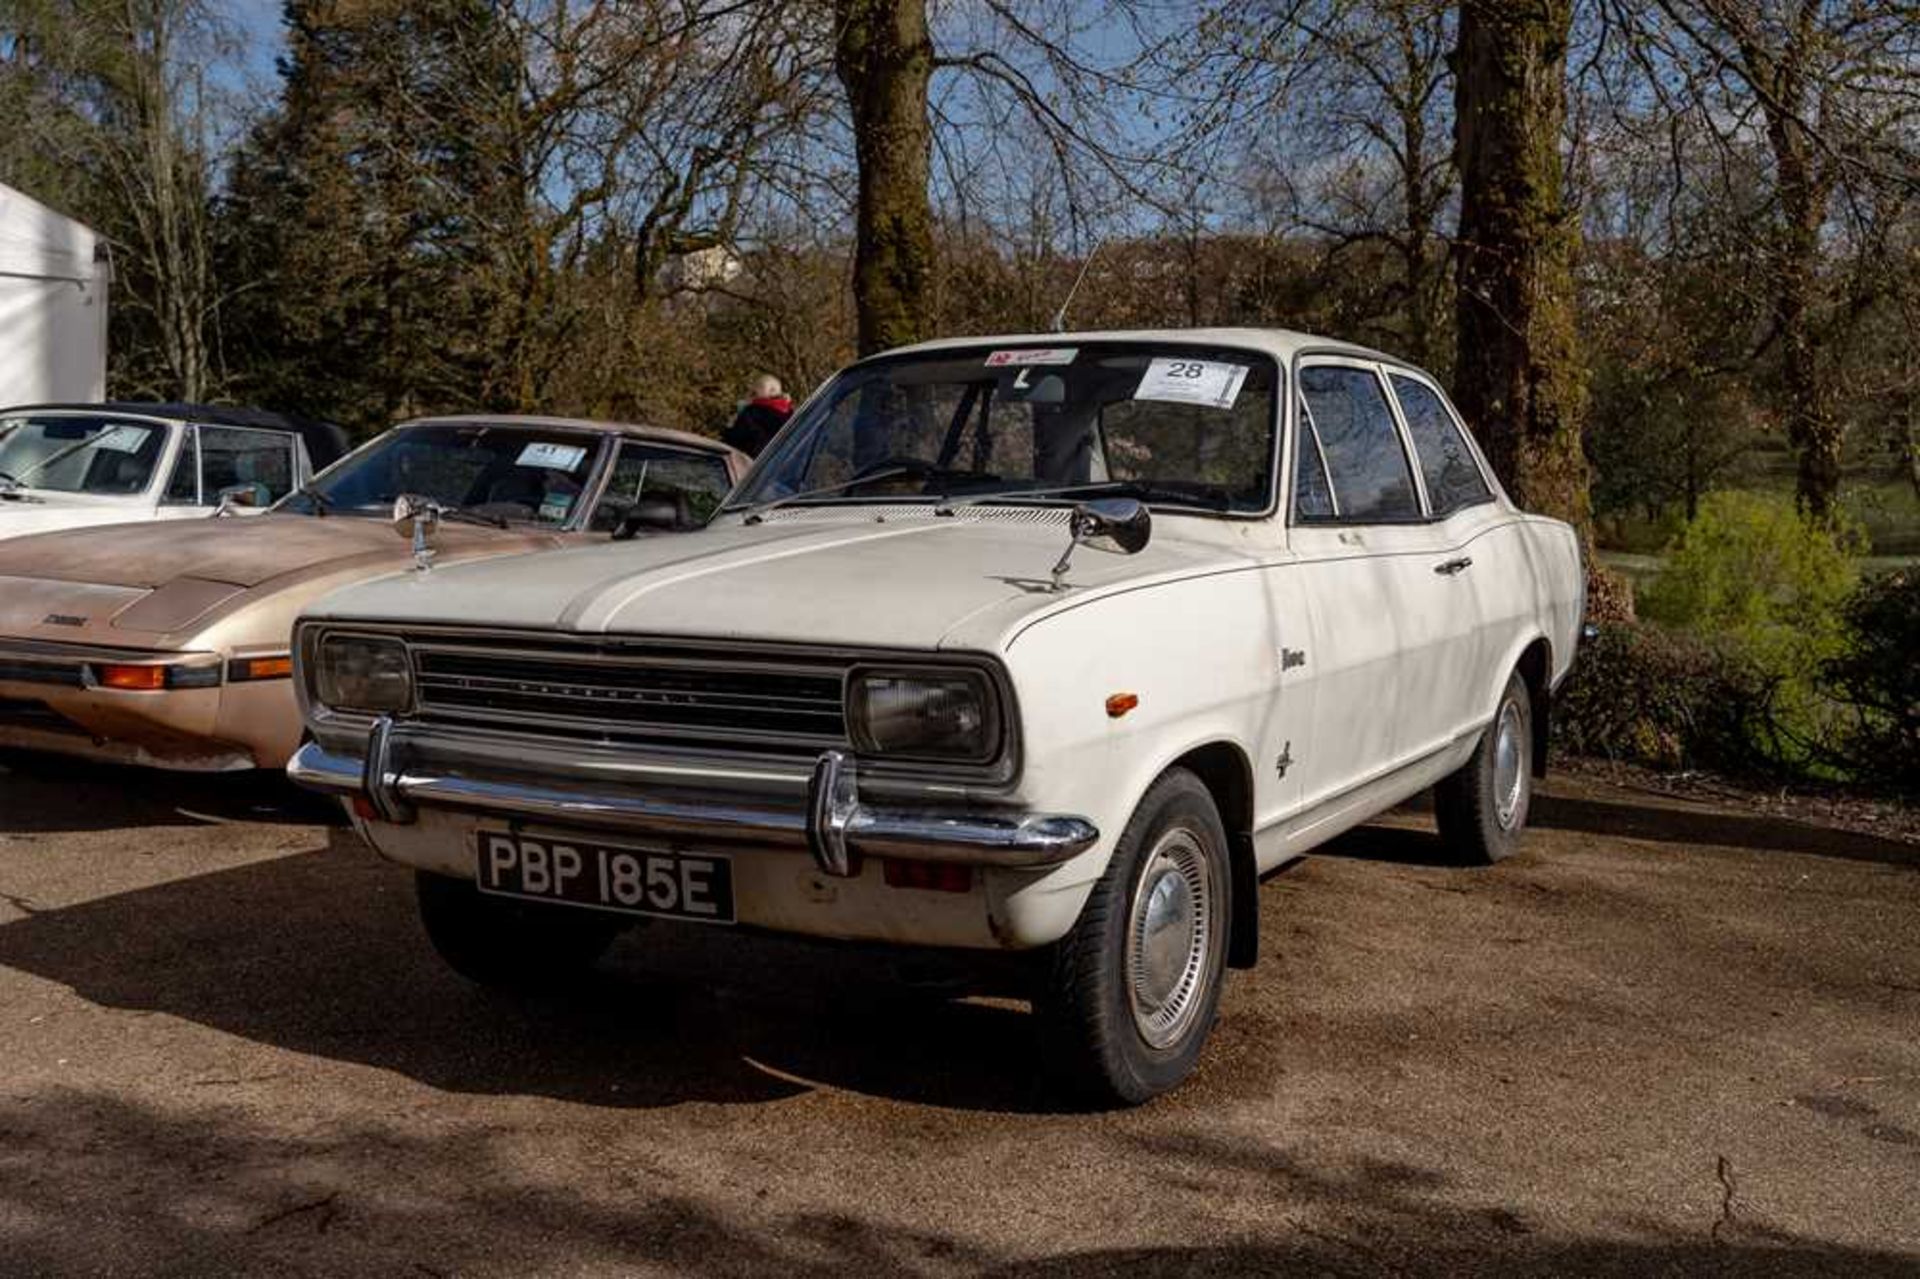 1967 Vauxhall Viva HB Period Blydenstein ‘Stage 2’ conversion - Image 6 of 33